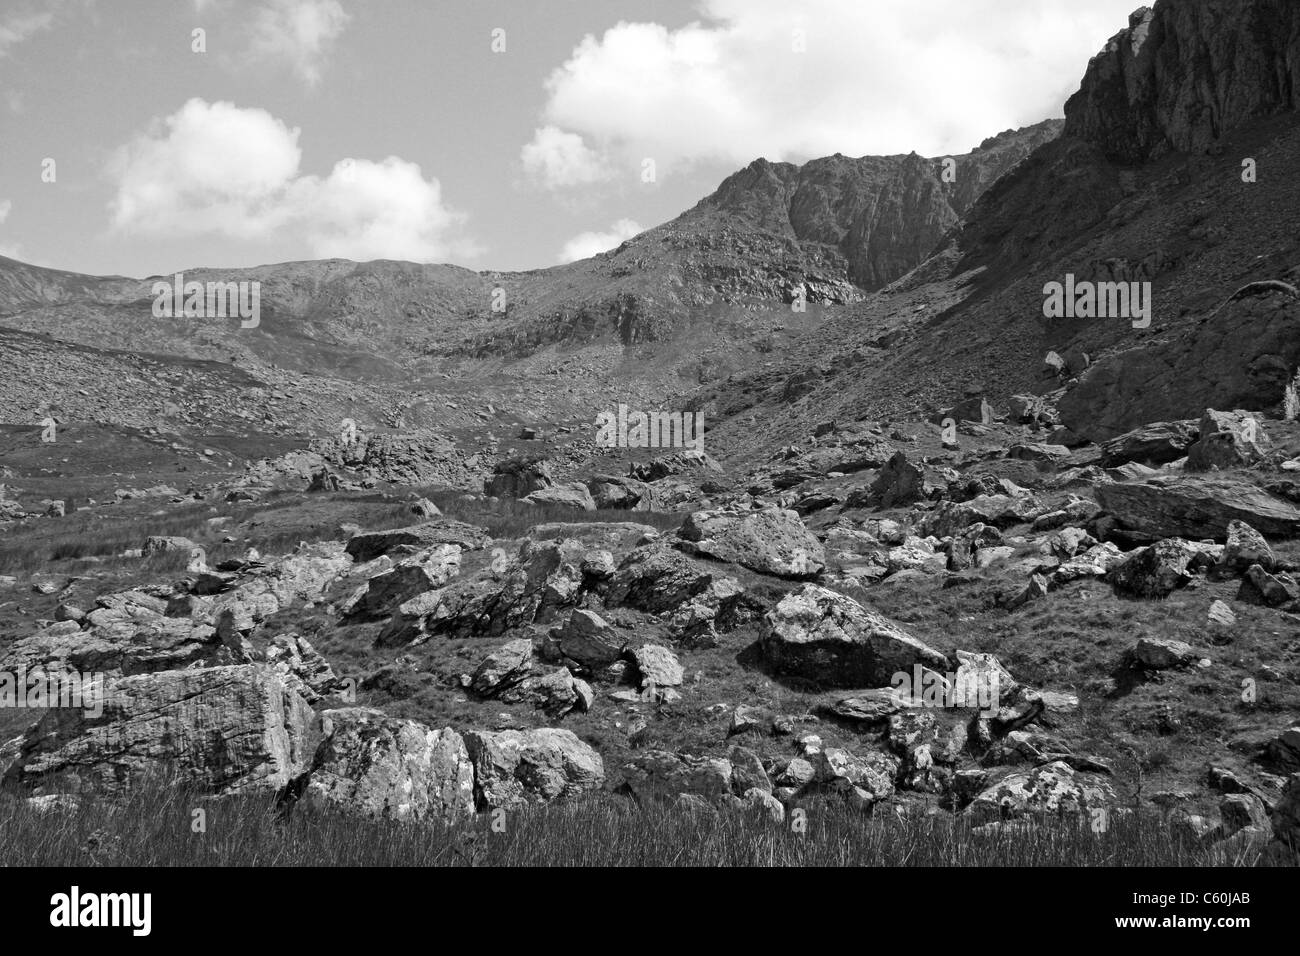 Mountainous Scenery In The Llafar Valley, Snowdonia, Wales Stock Photo